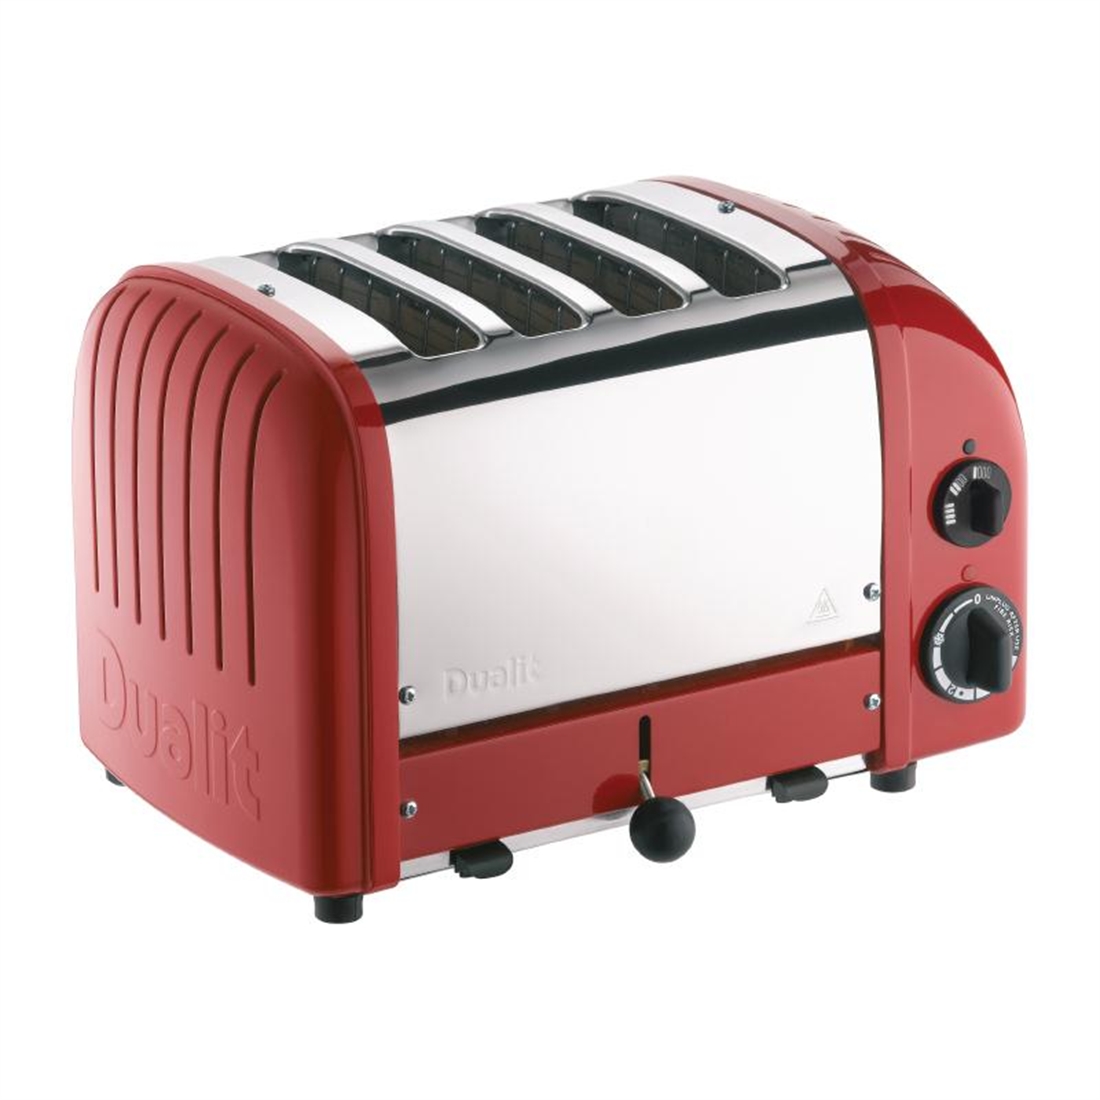 Dualit 2 x 2 Combi Vario 4 Slice Toaster Red 42175